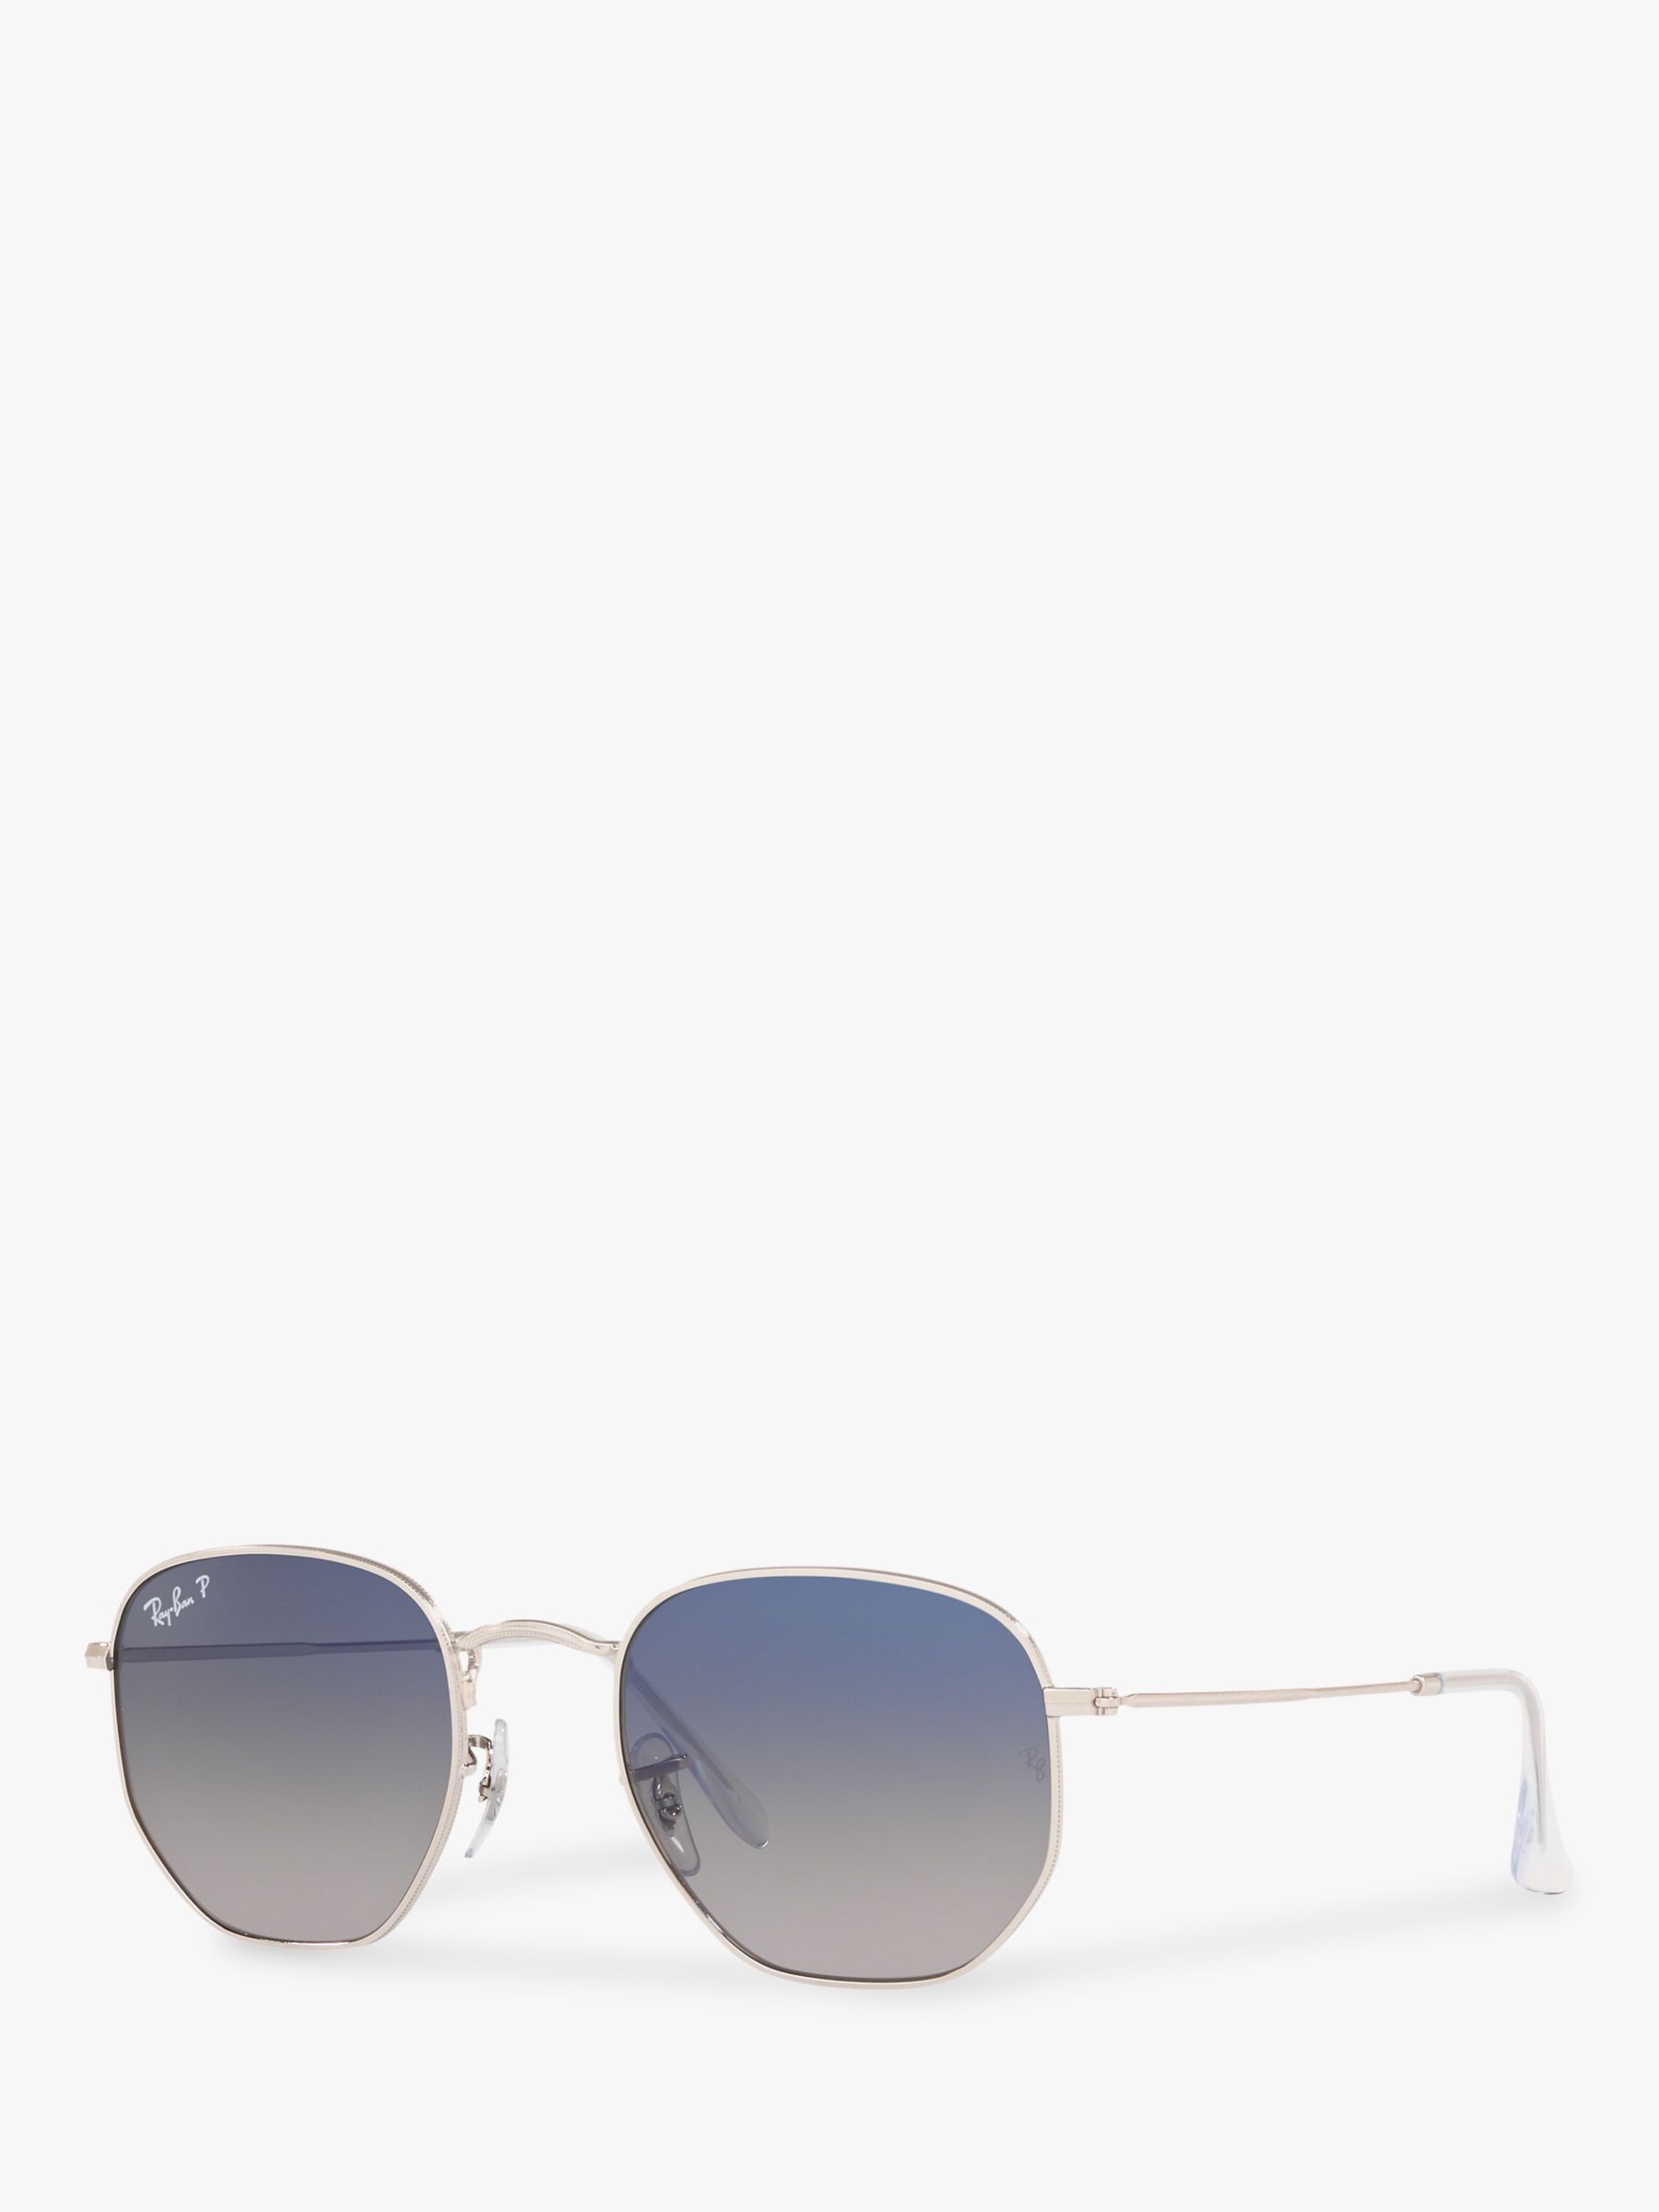 Ray-Ban RB3548N Unisex Polarised Hexagonal Sunglasses, Silver/Blue at John  Lewis & Partners